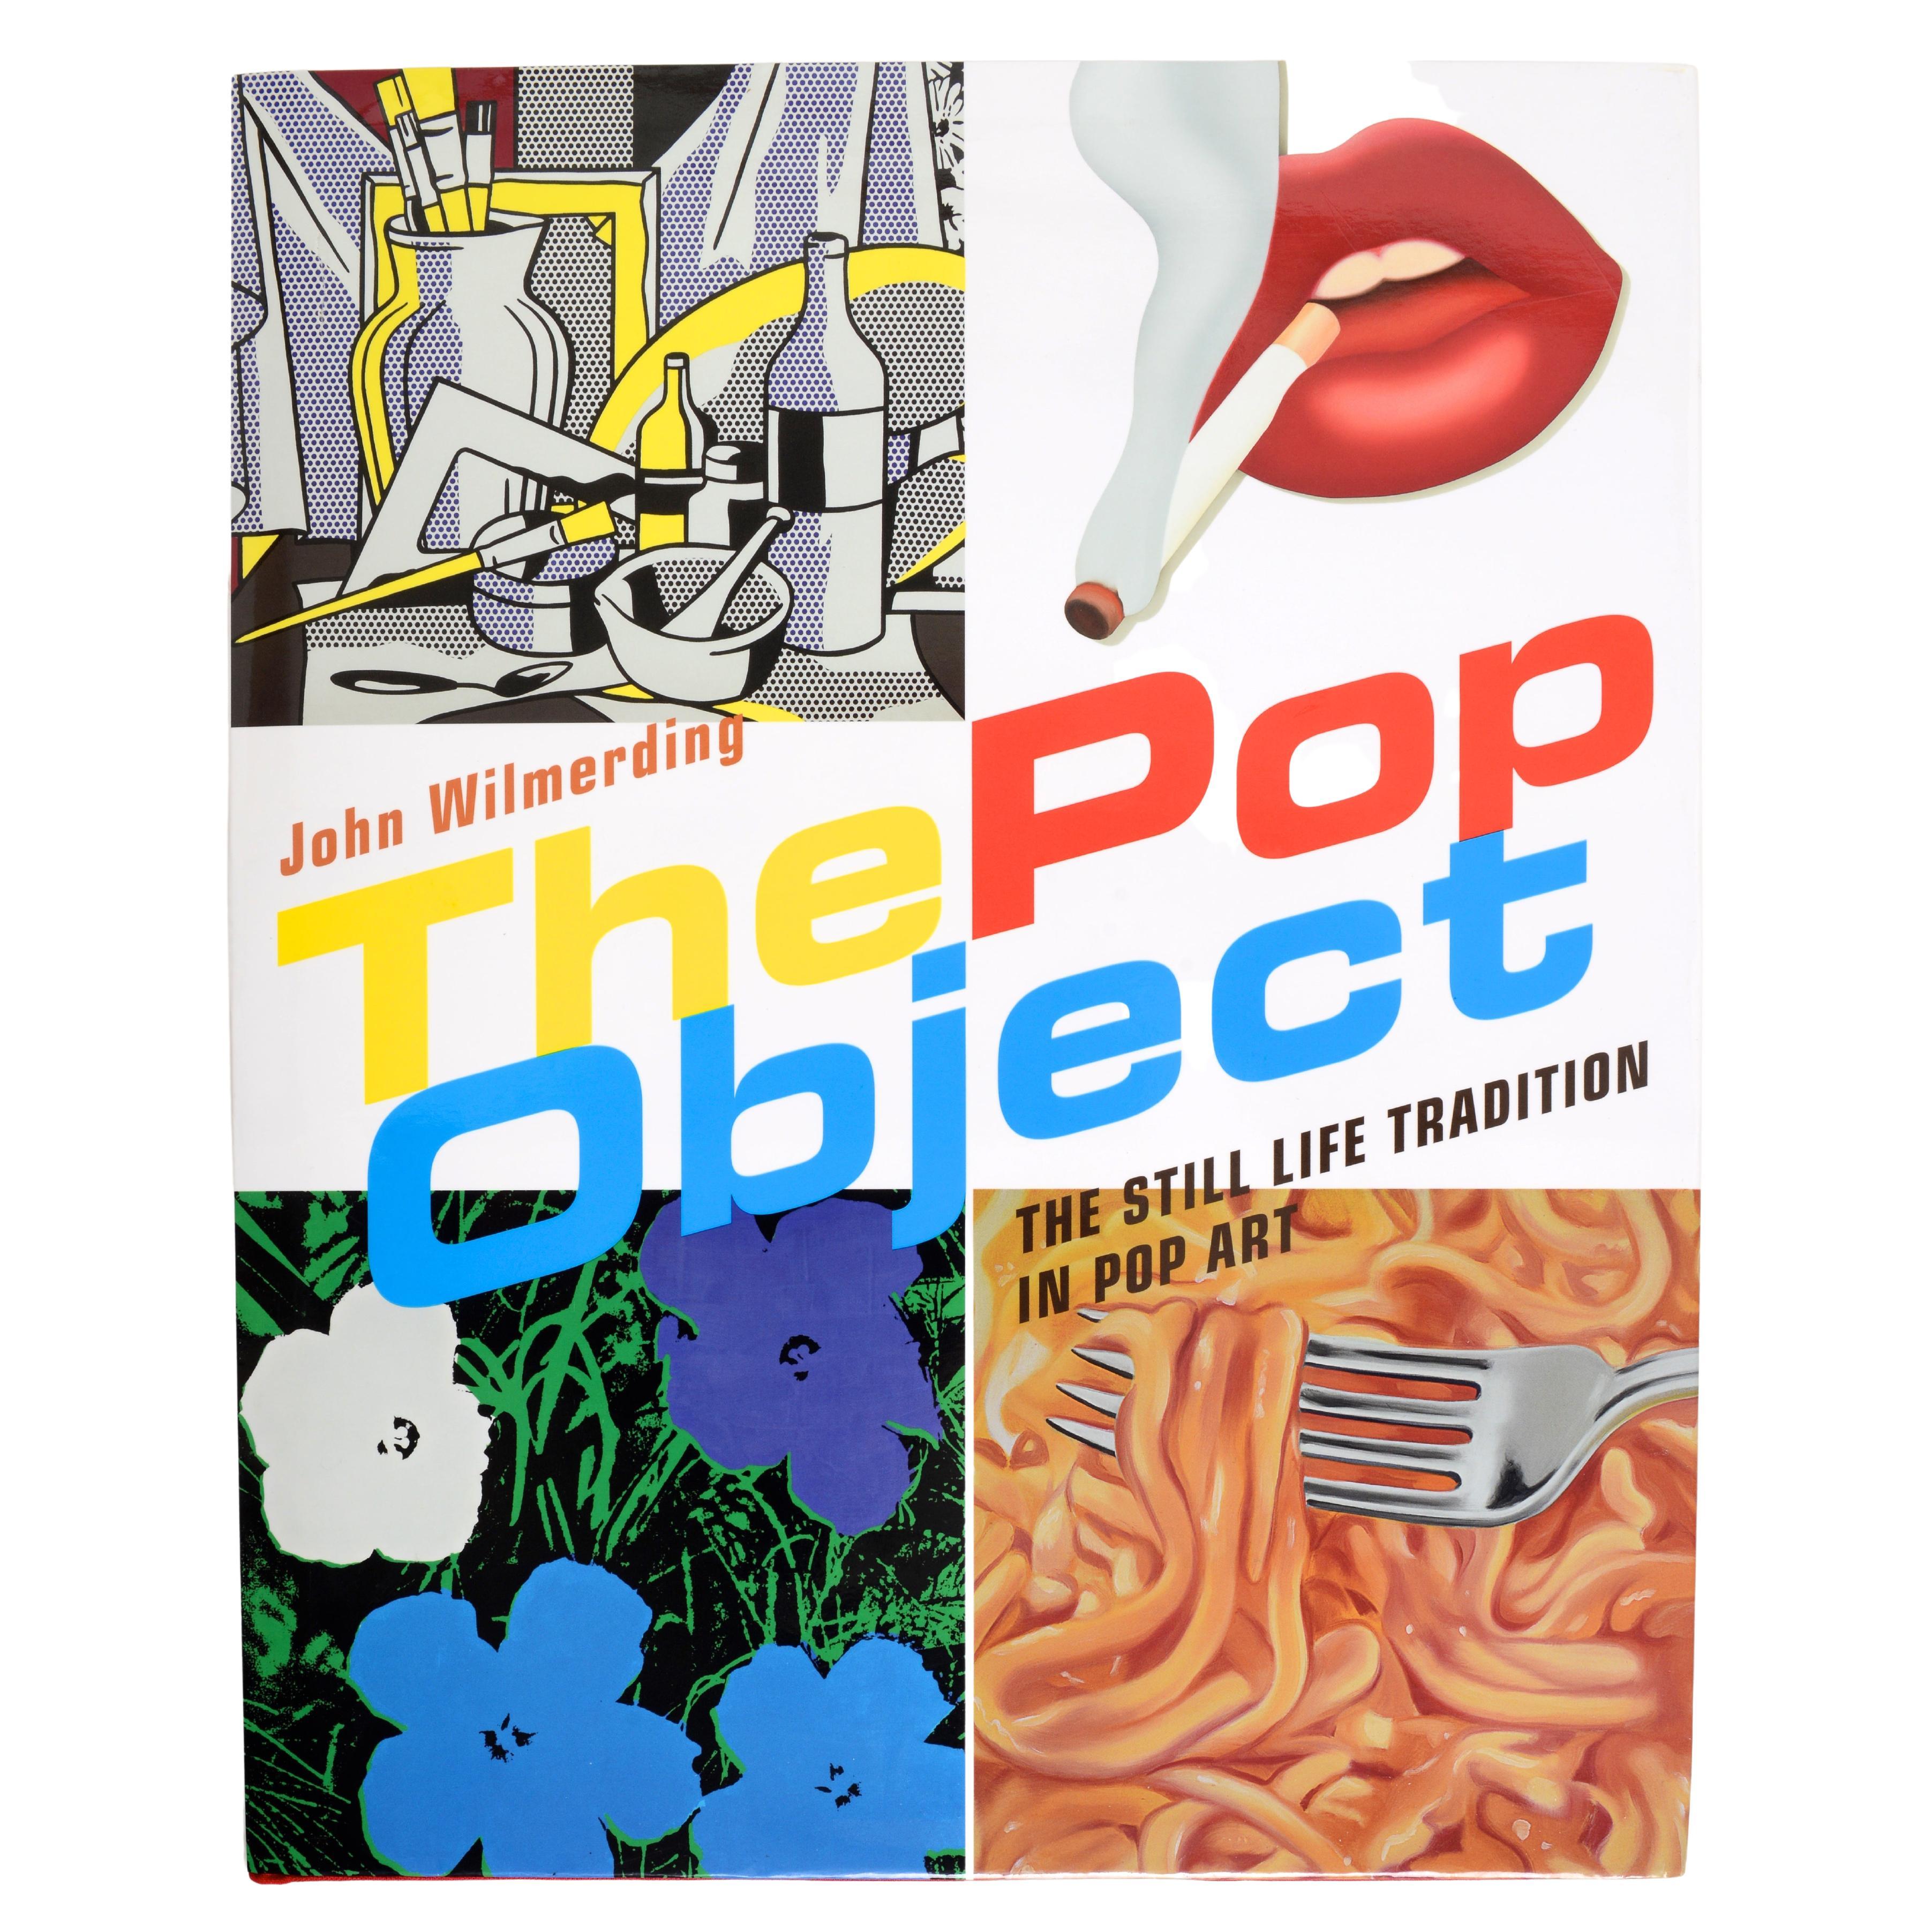 The Pop Object The Still Life Tradition in Pop Art by John Wilmerding, 1st Ed